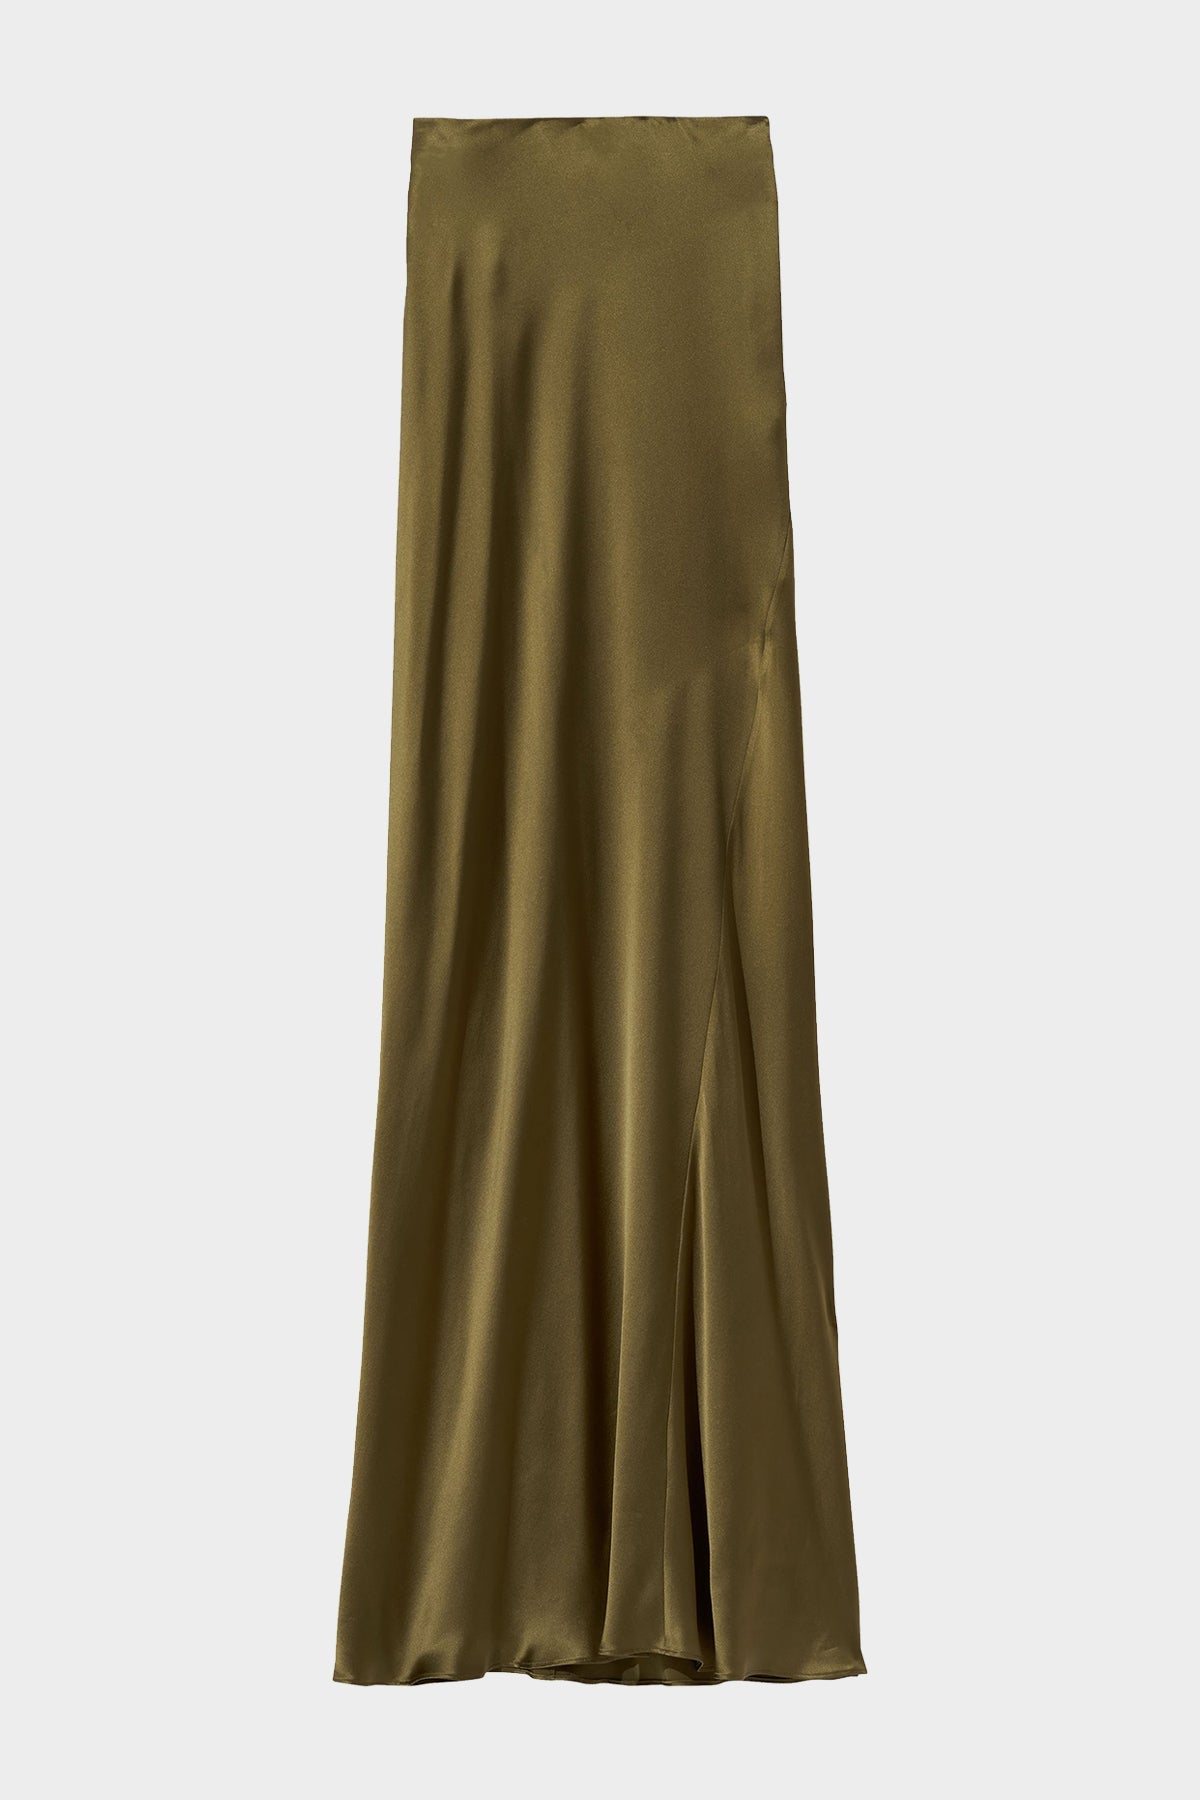 Clecia Silk Maxi Skirt in Olive - shop-olivia.com